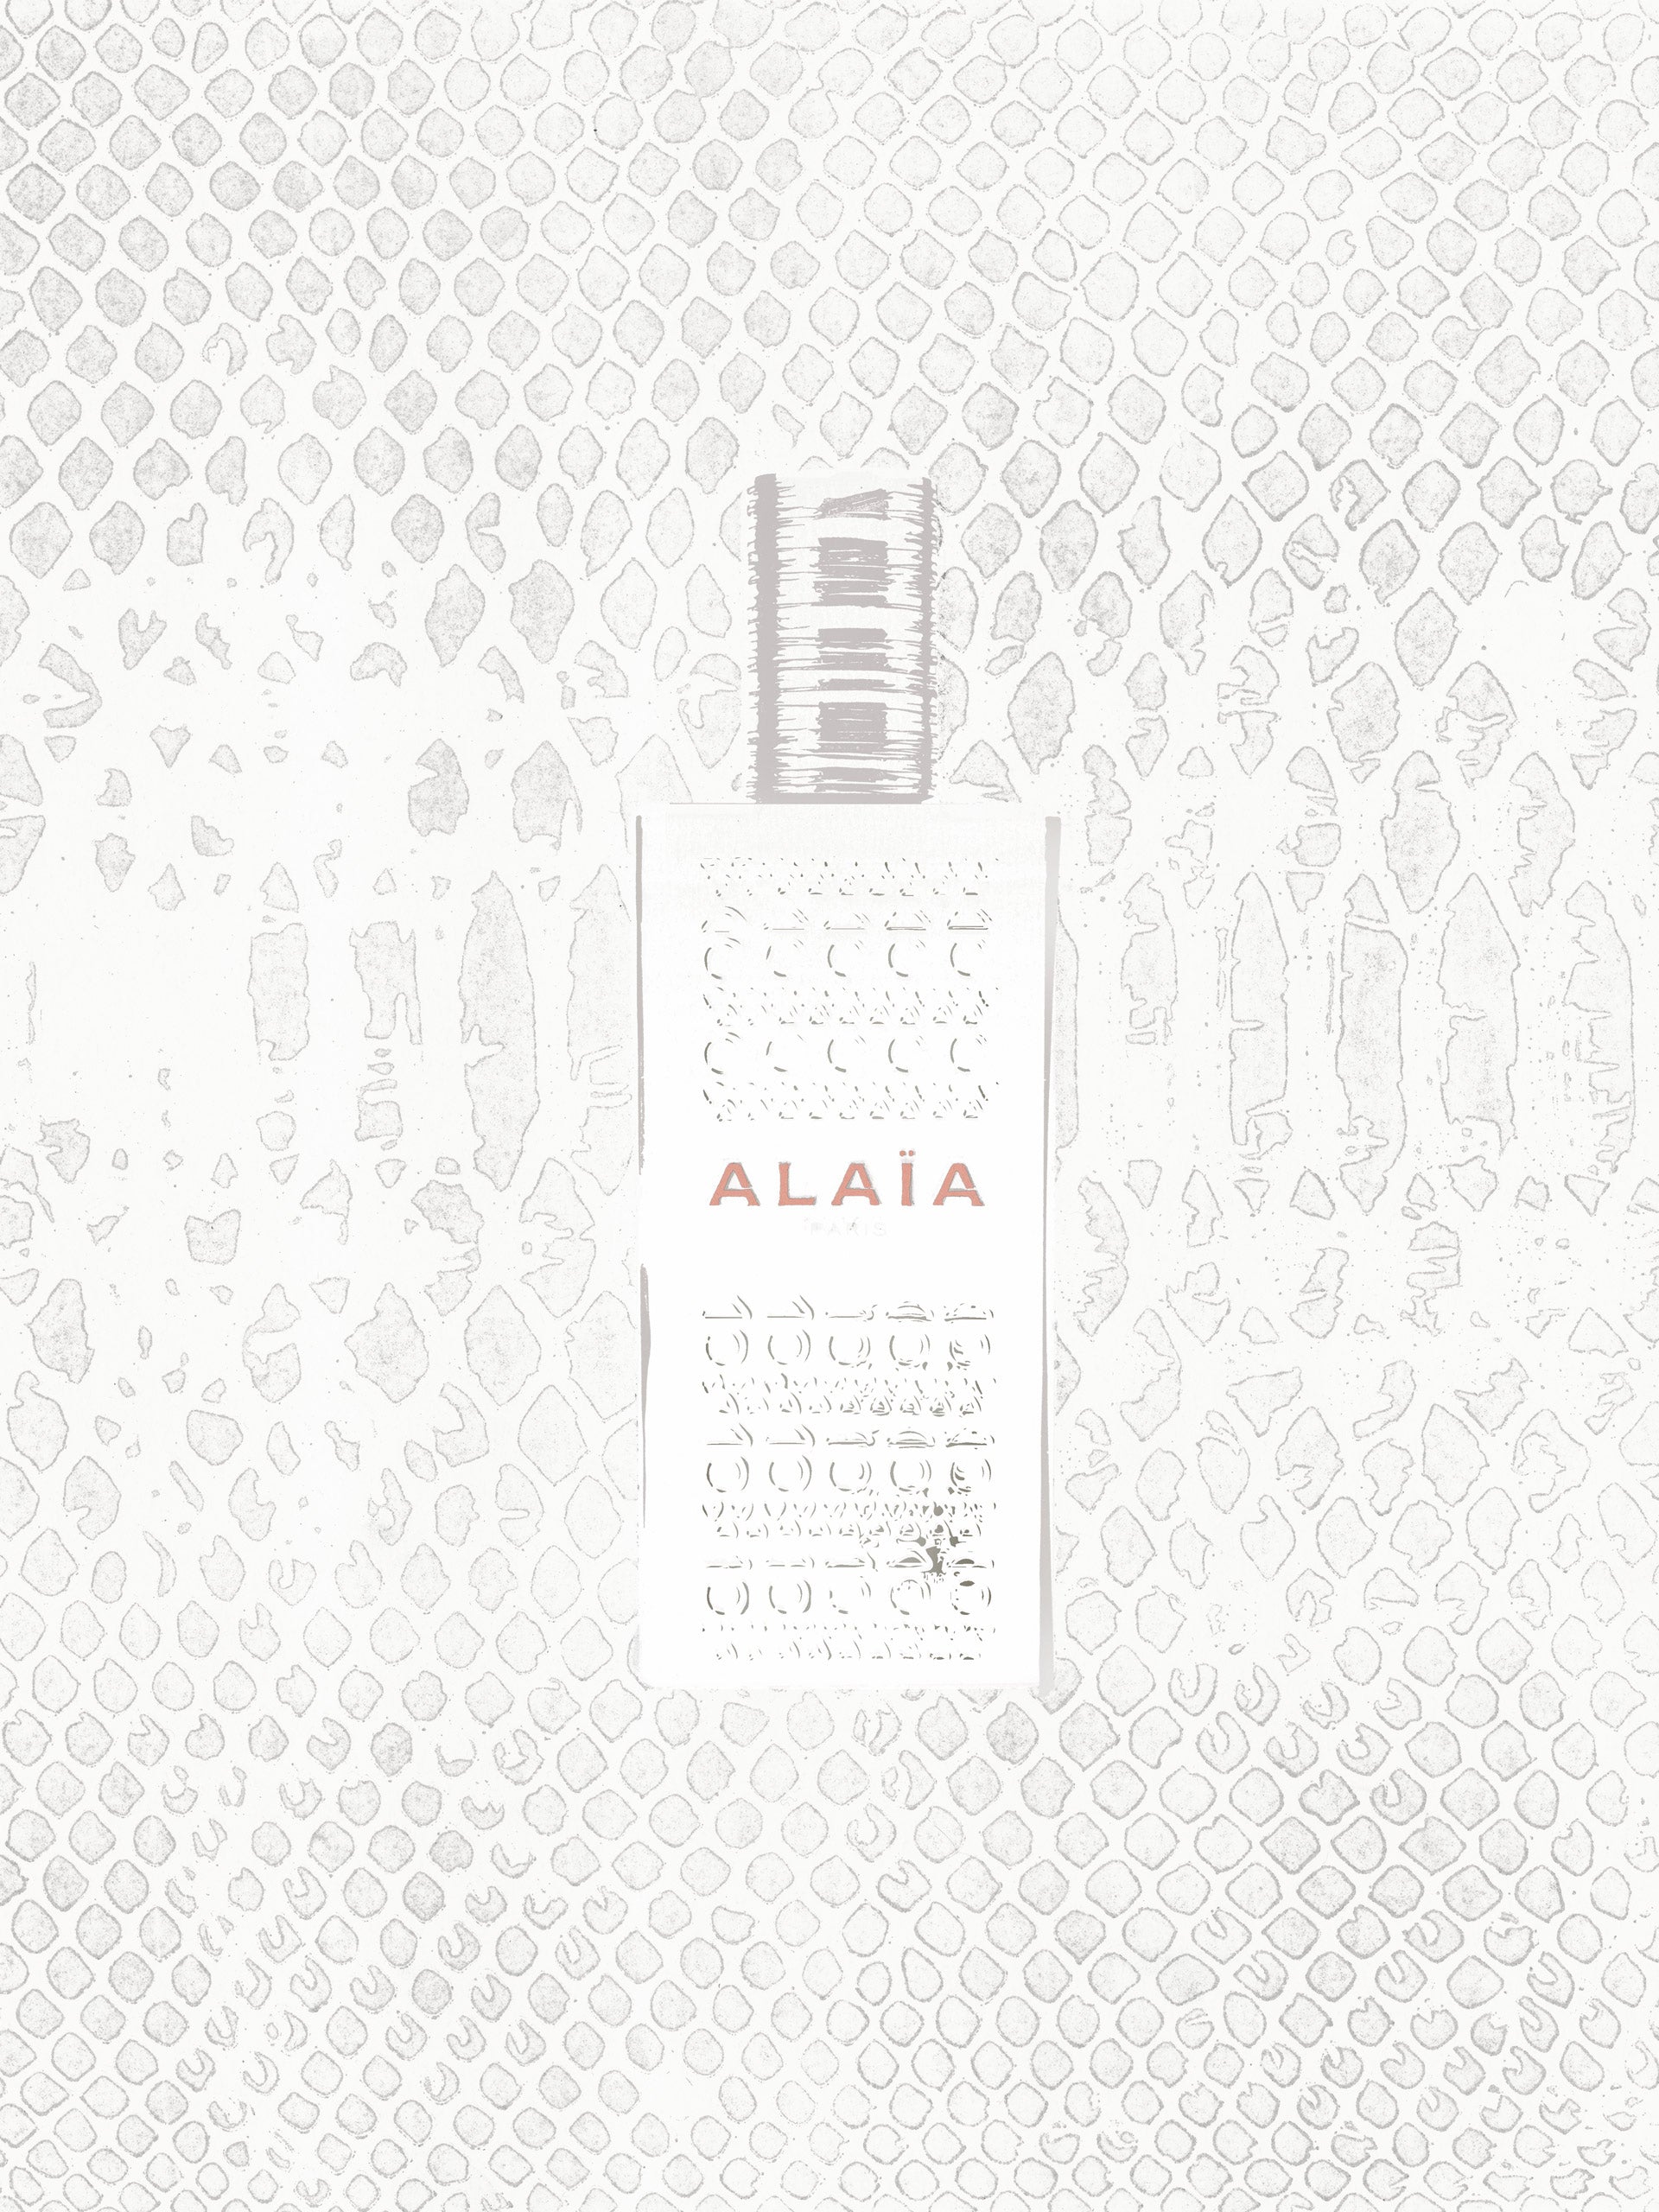 Alaïa Perfume © Aurore de la Morinerie